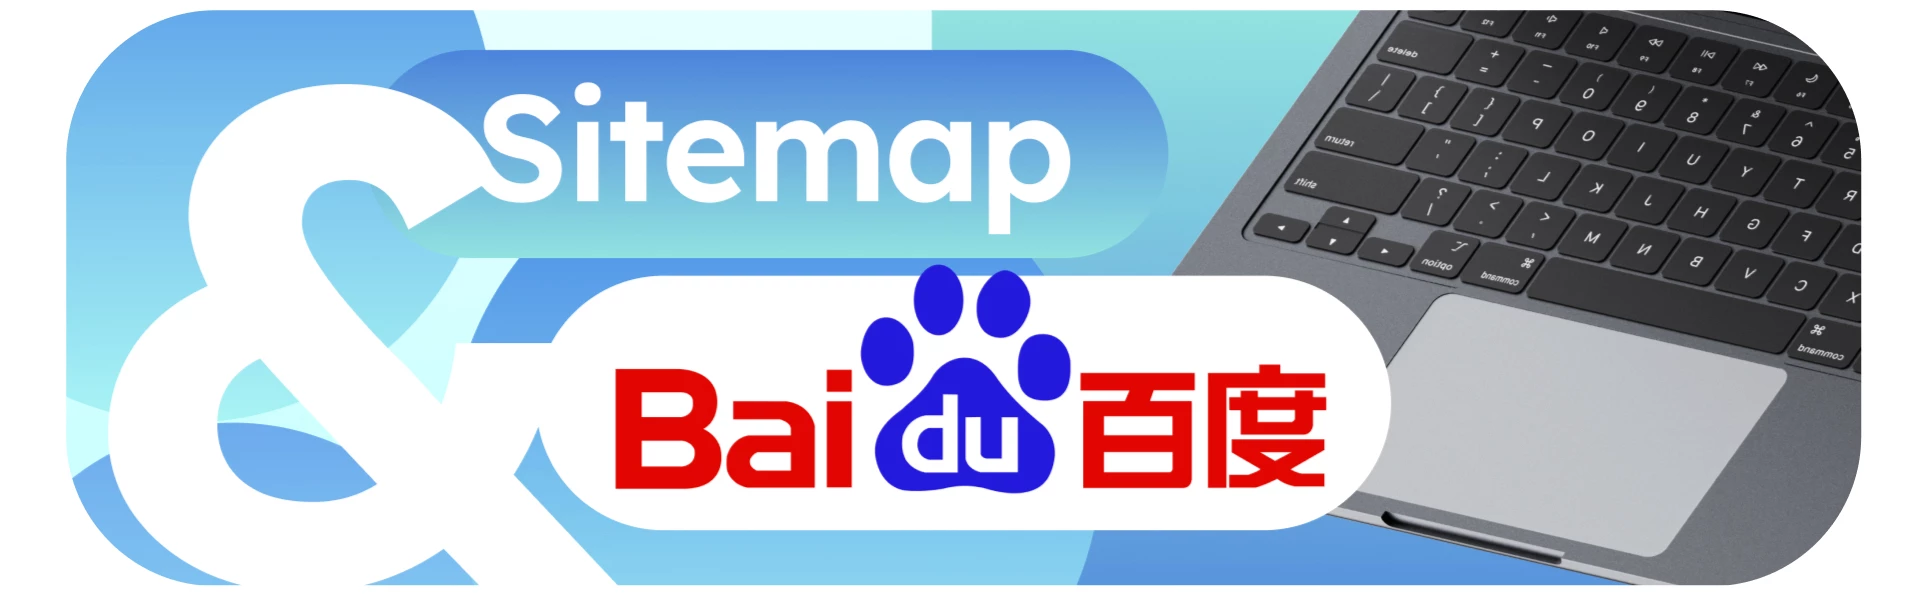 Sitemap and Baidu